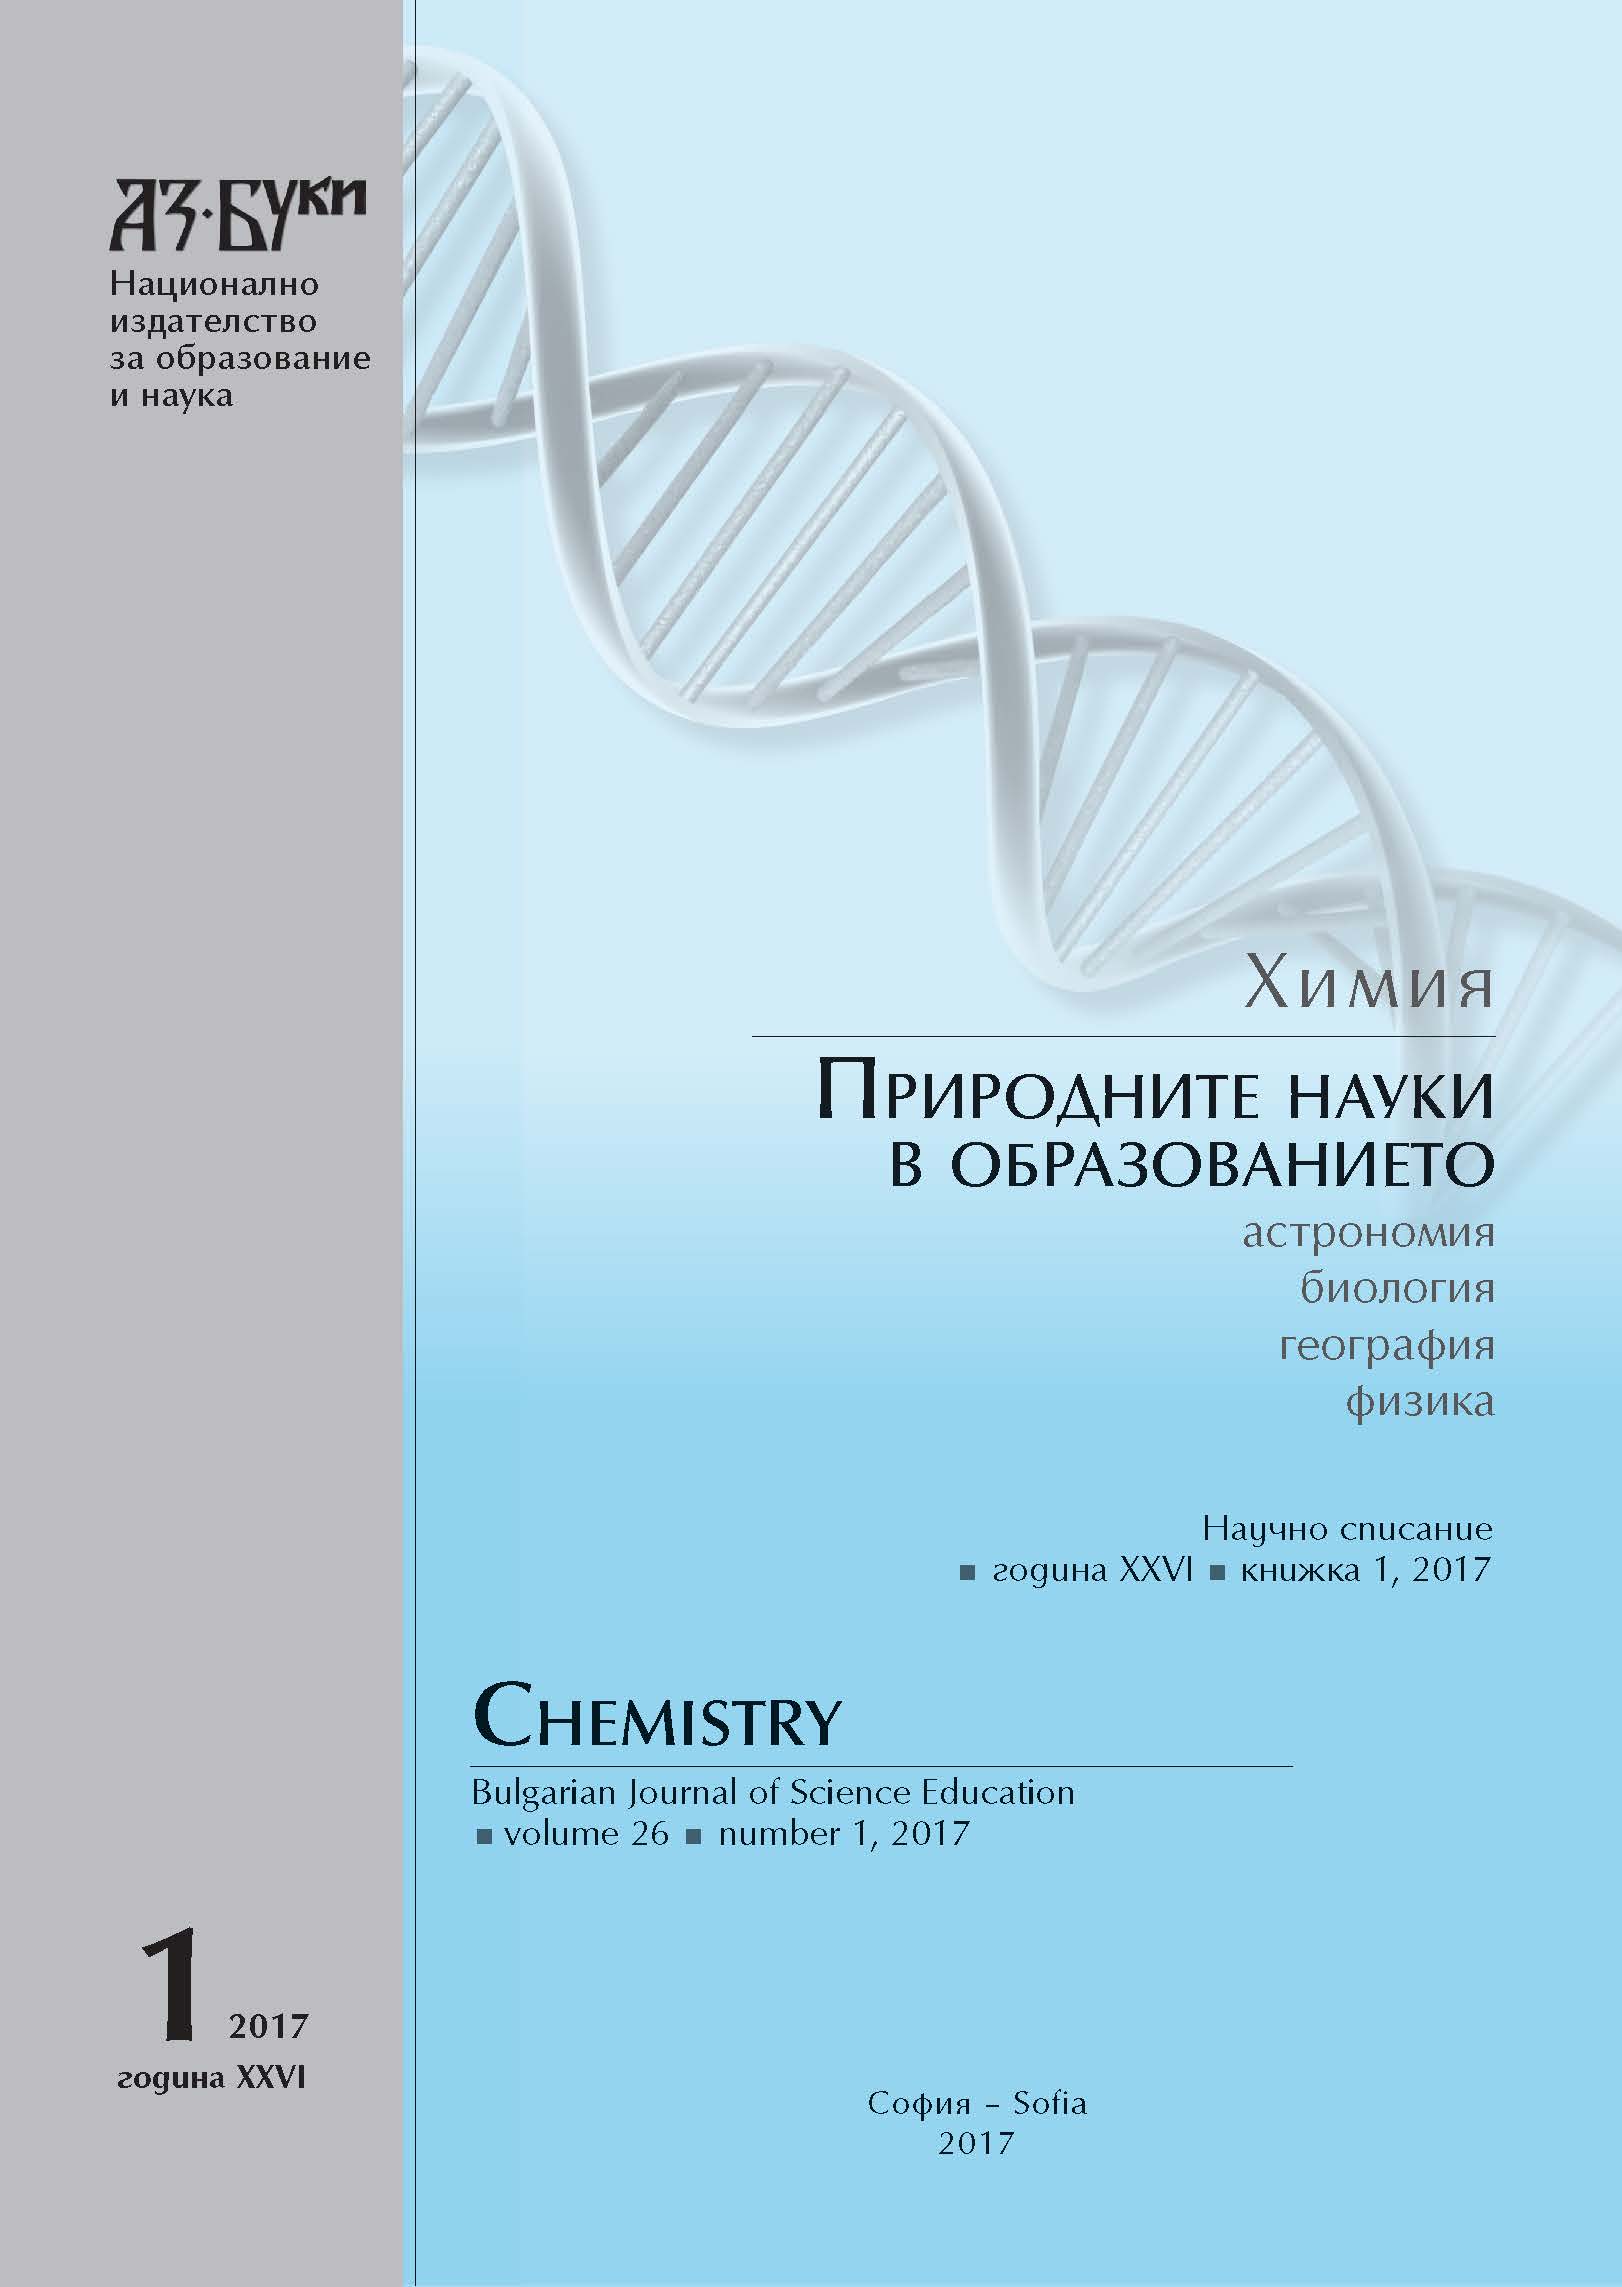 Chemistry. Bulgarian Journal of Science Education